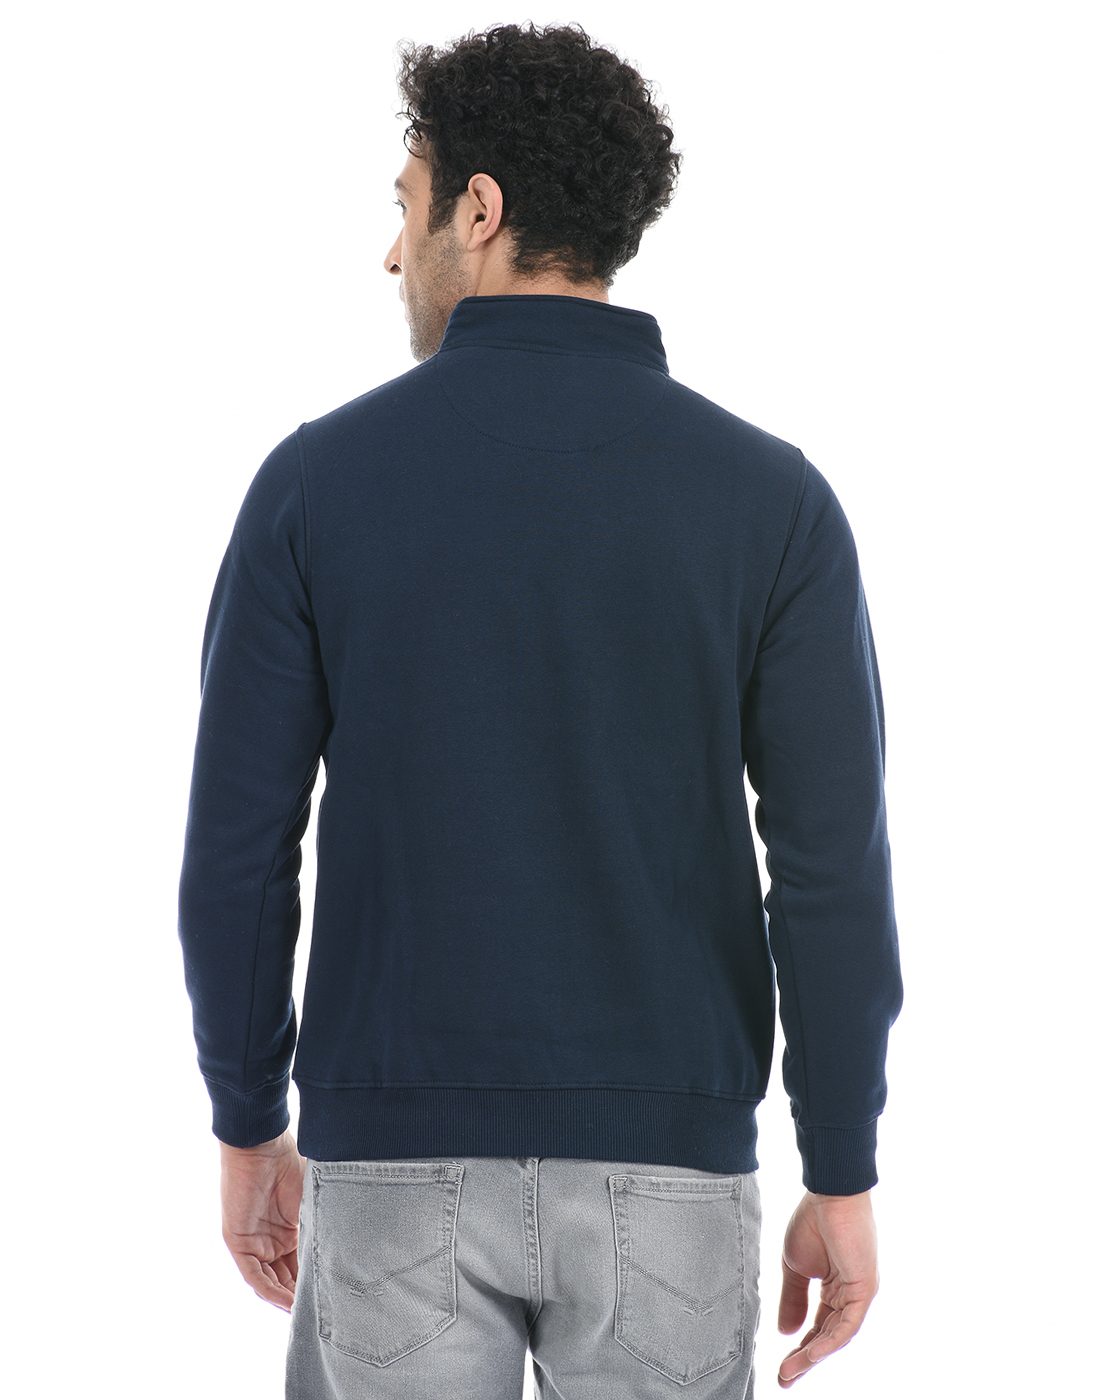 Cloak & Decker by Monte Carlo Men Solid Navy Sweatshirt